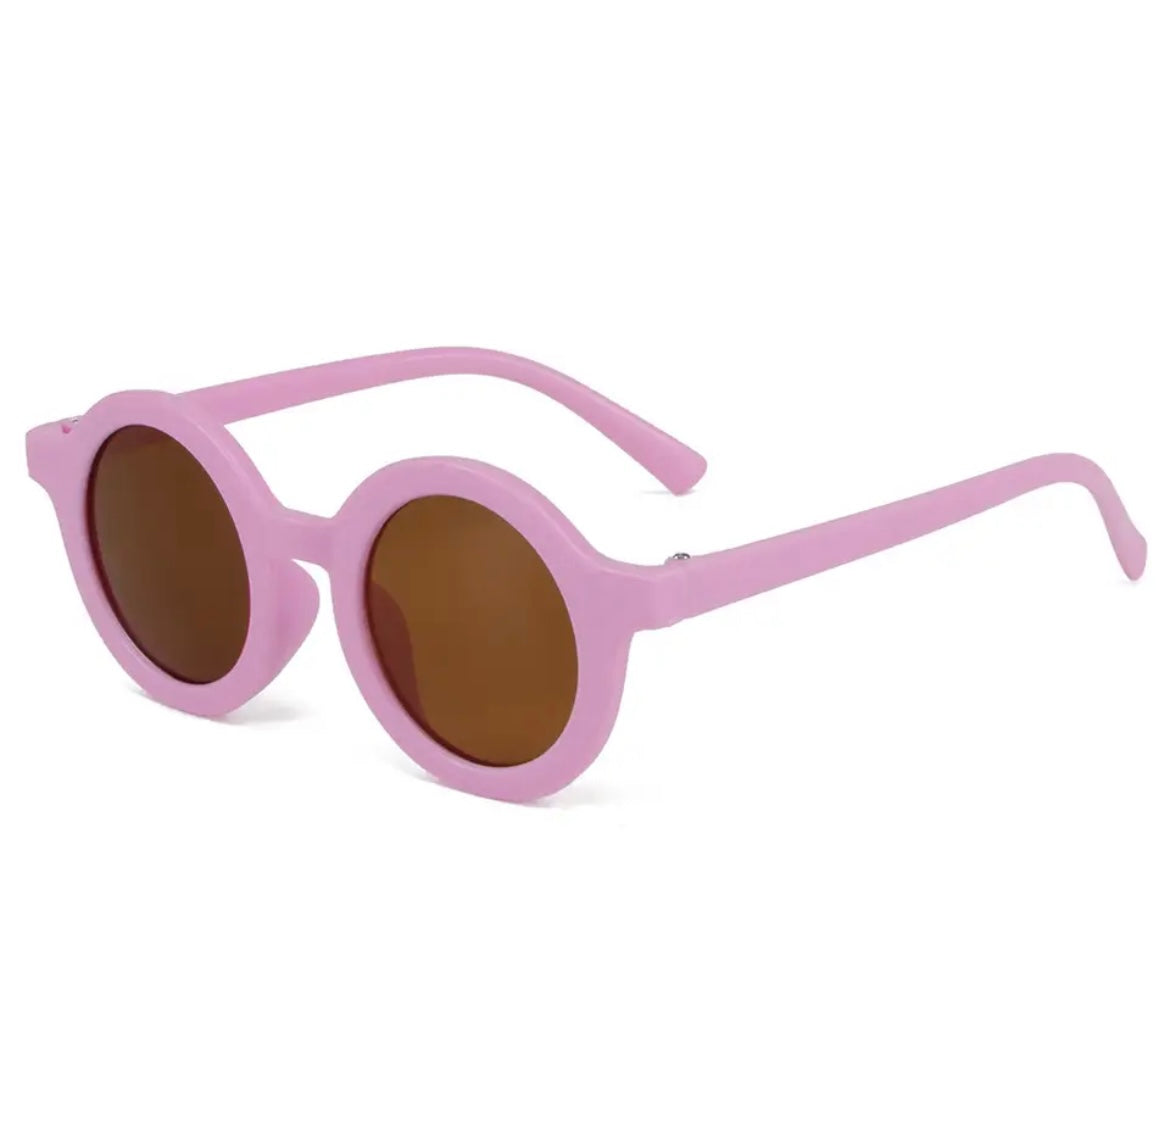 Baby/Toddler sunglasses